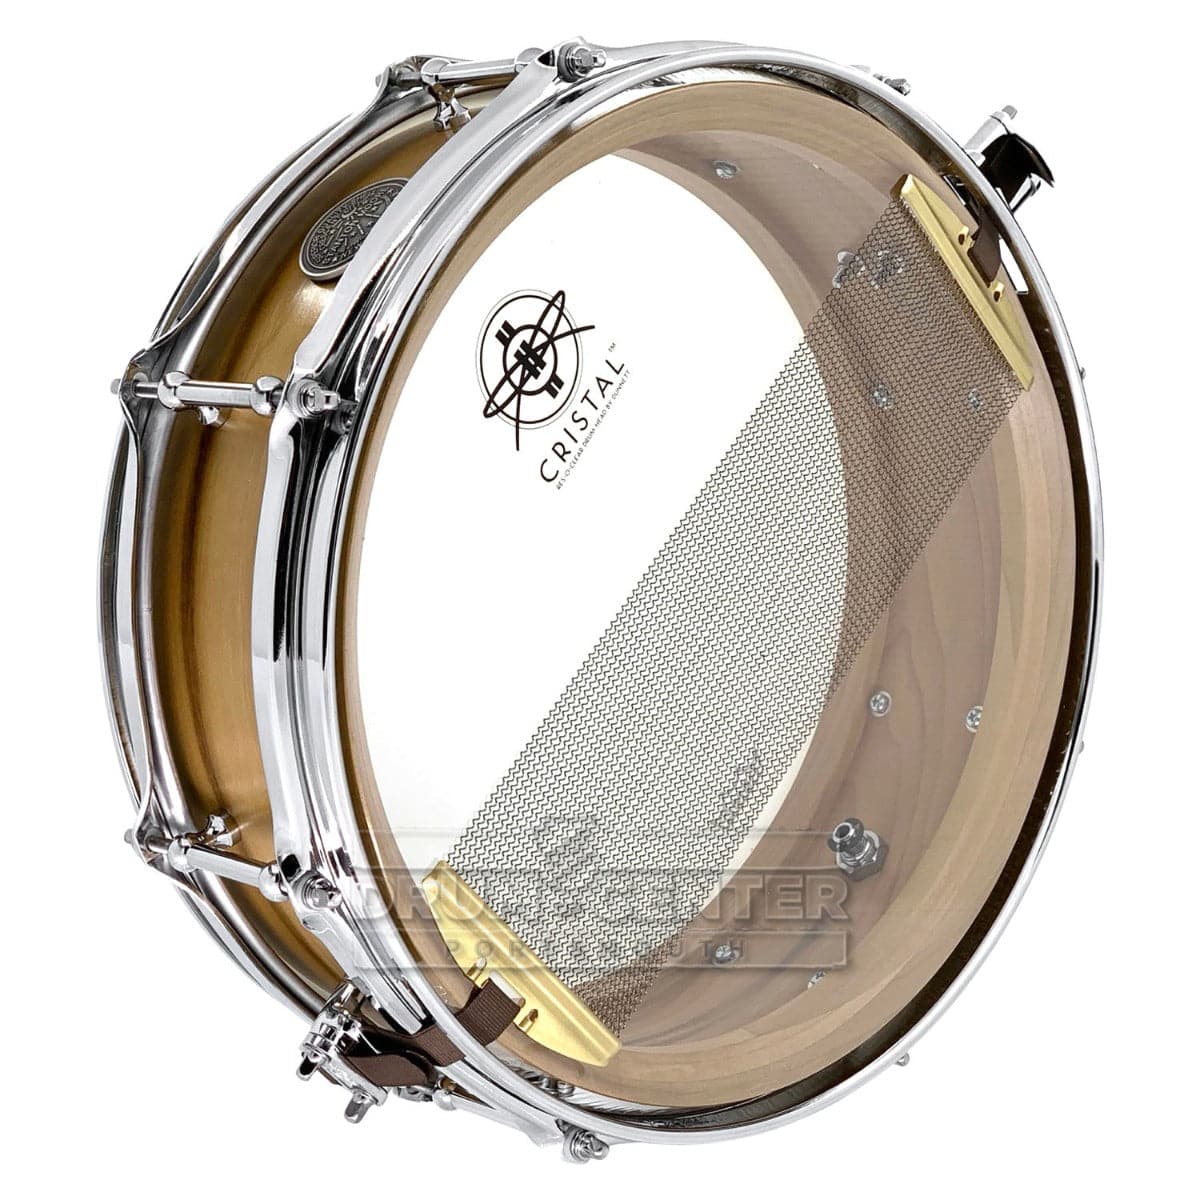 Stanton Moore Spirit of New Orleans MonoPly Poplar Snare Drum 14x4.5